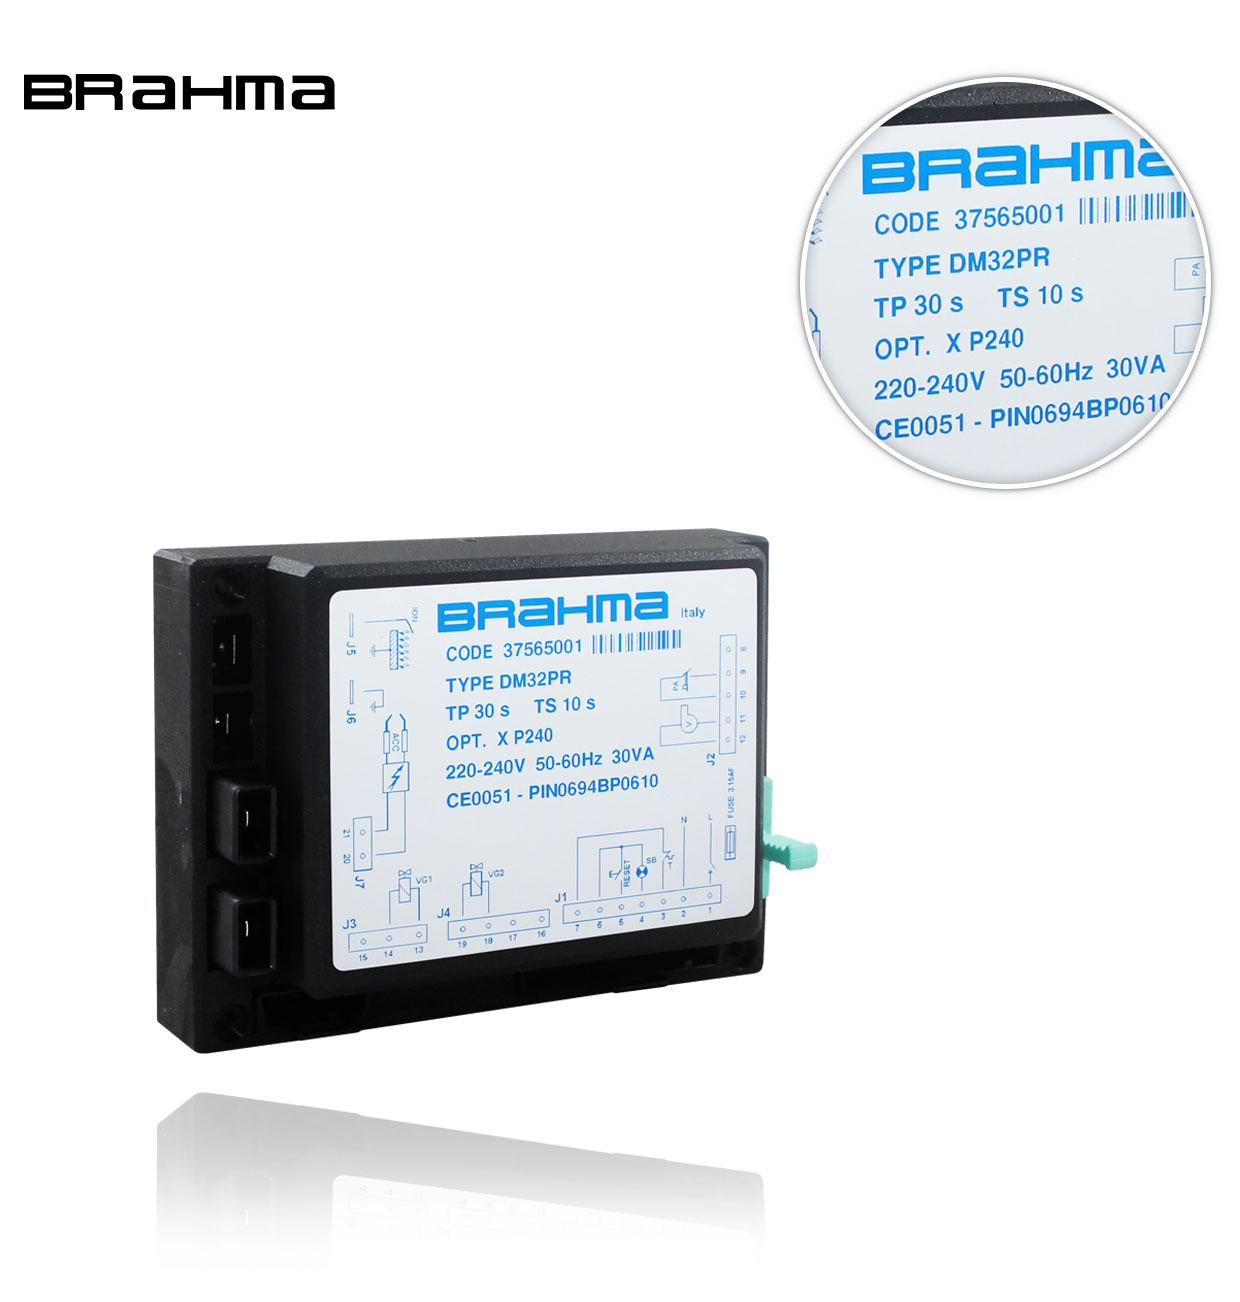 DMN 32PR // DM 32PR  TP30s  TS10  220-240V/50-60Hz  BRAHMA CONTROL BOX